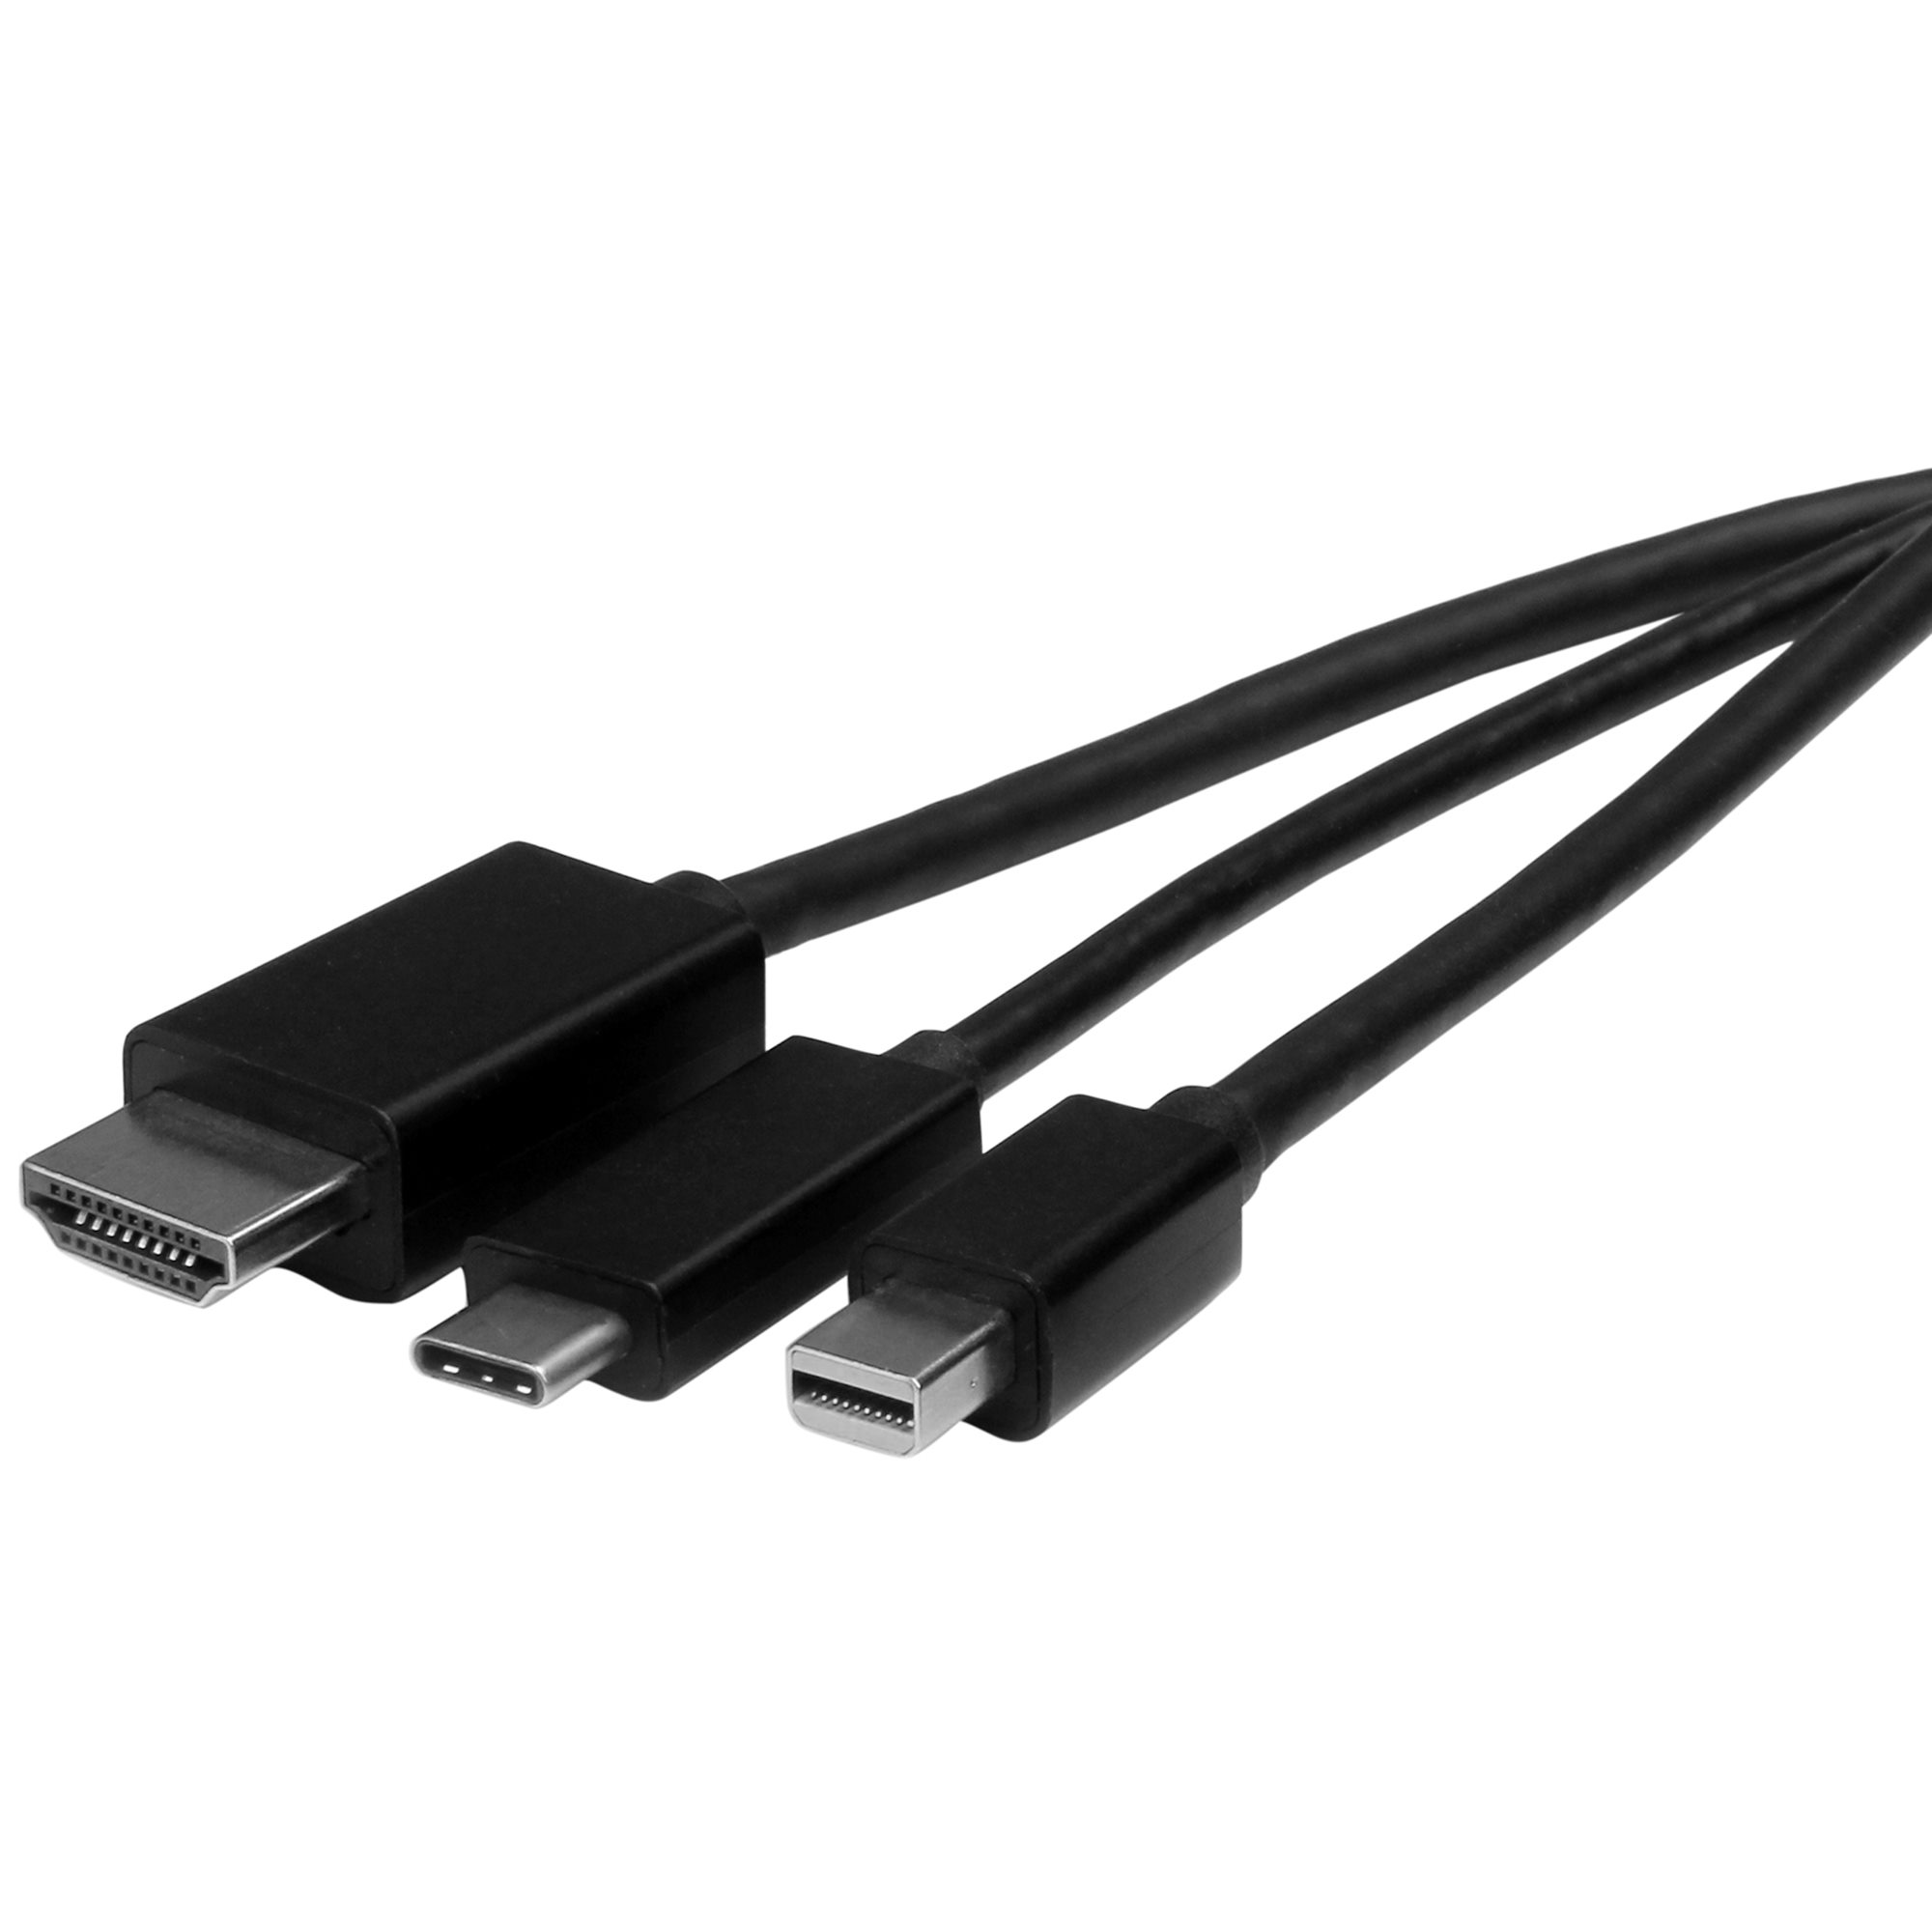 USB-C, HDMI or Mini DisplayPort to HDMI Converter Cable - 2 m (6 ft.)